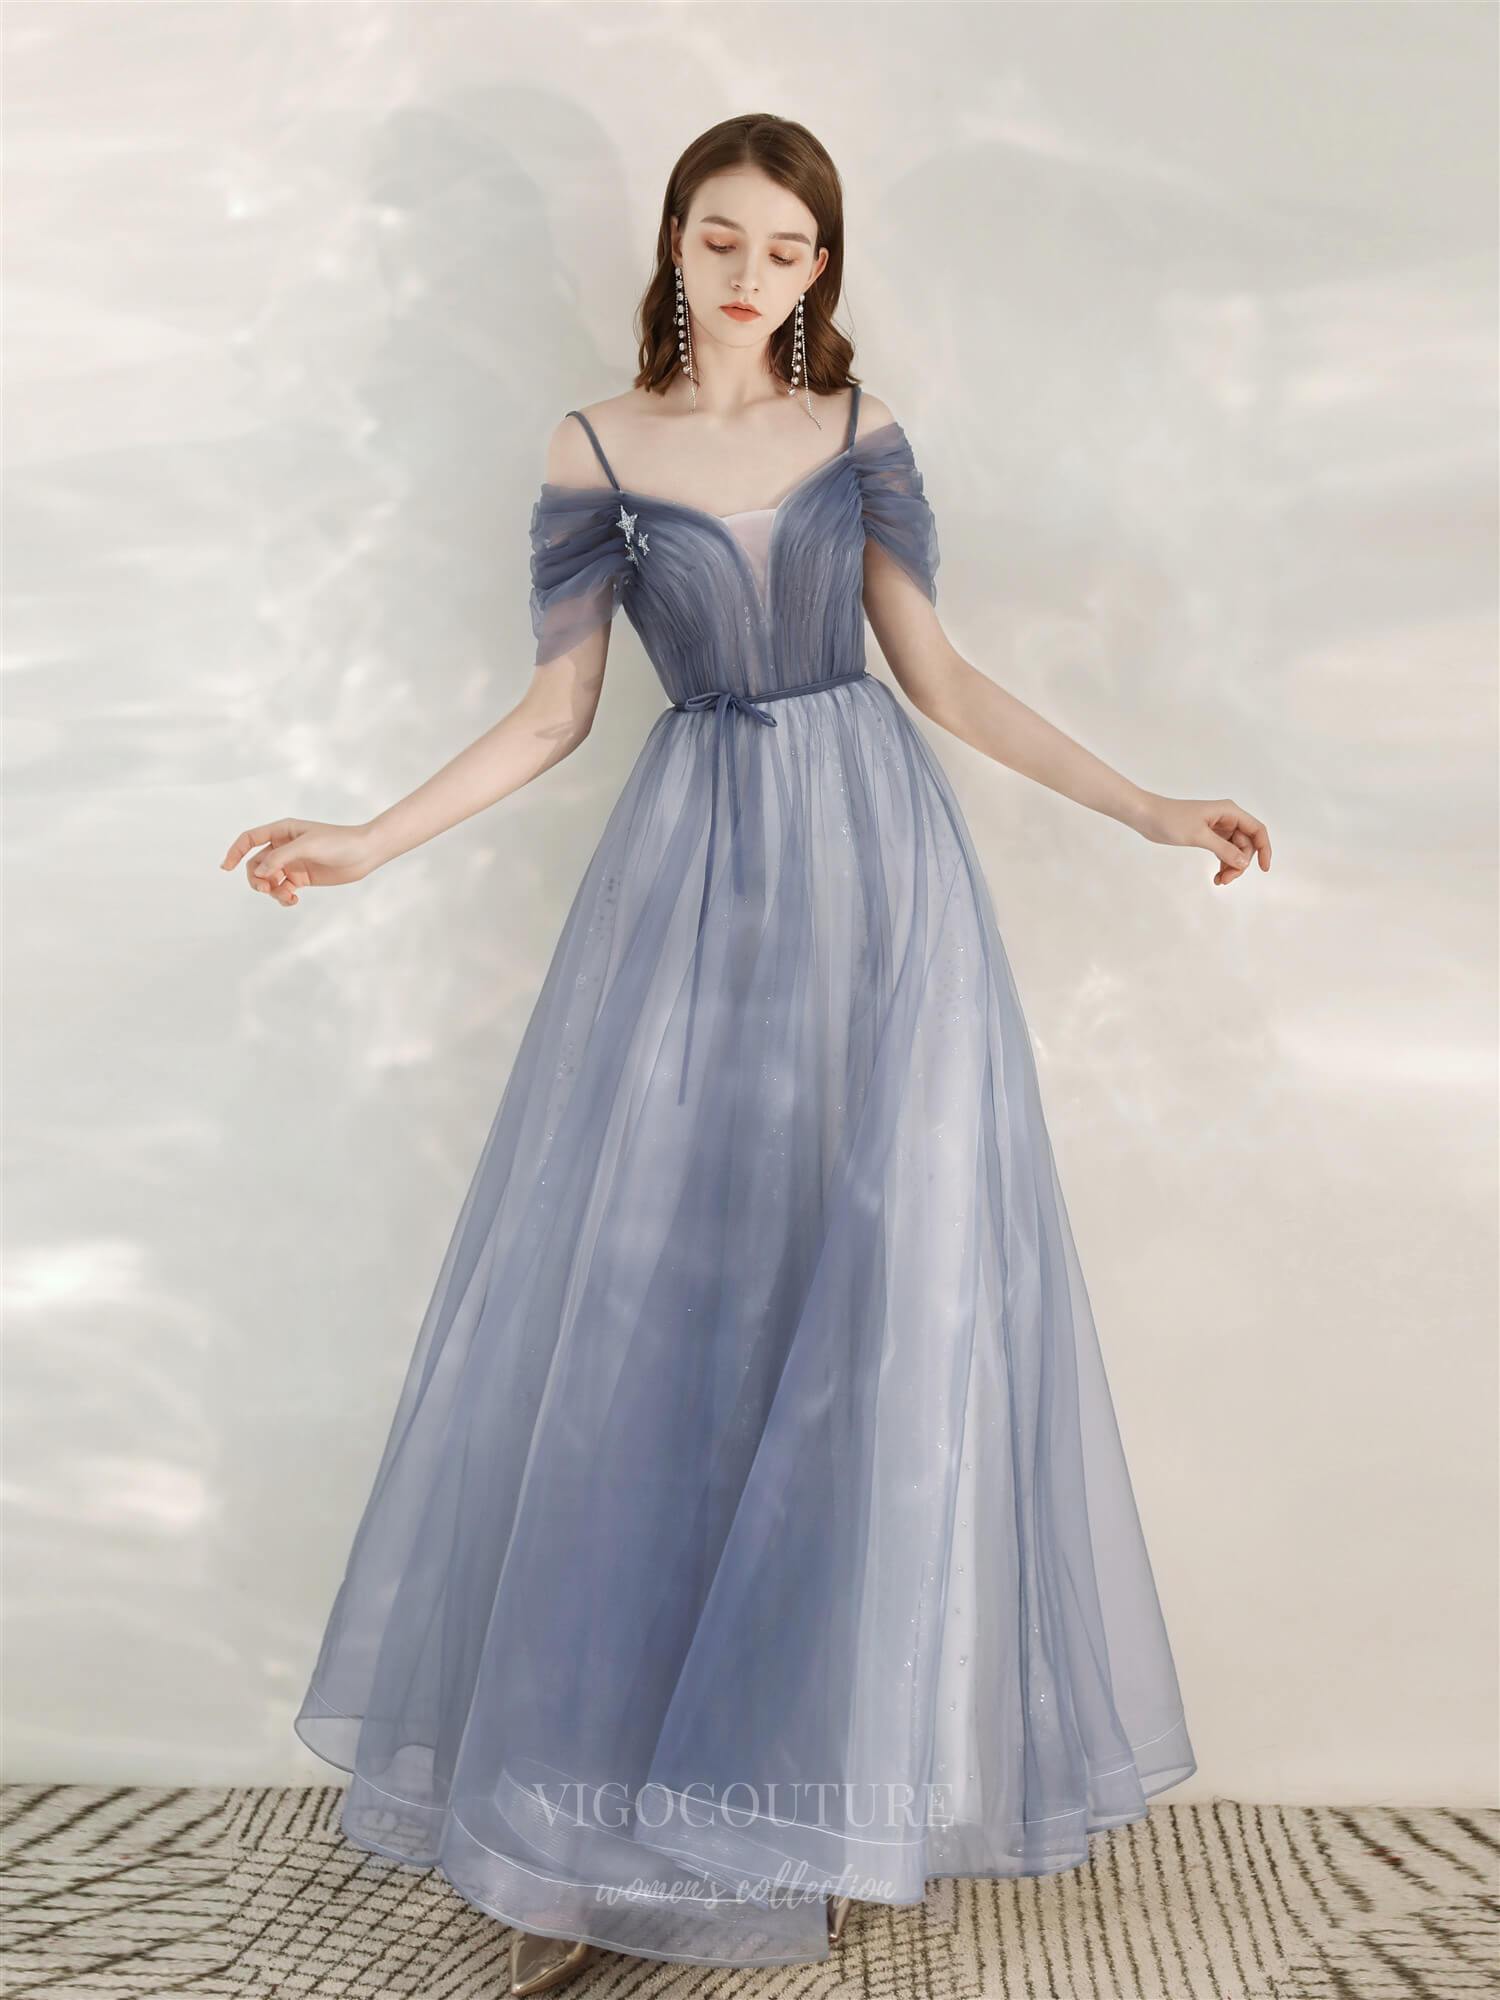 vigocouture-Blue V-Neck Tulle Prom Dress 20692-Prom Dresses-vigocouture-Blue-US2-